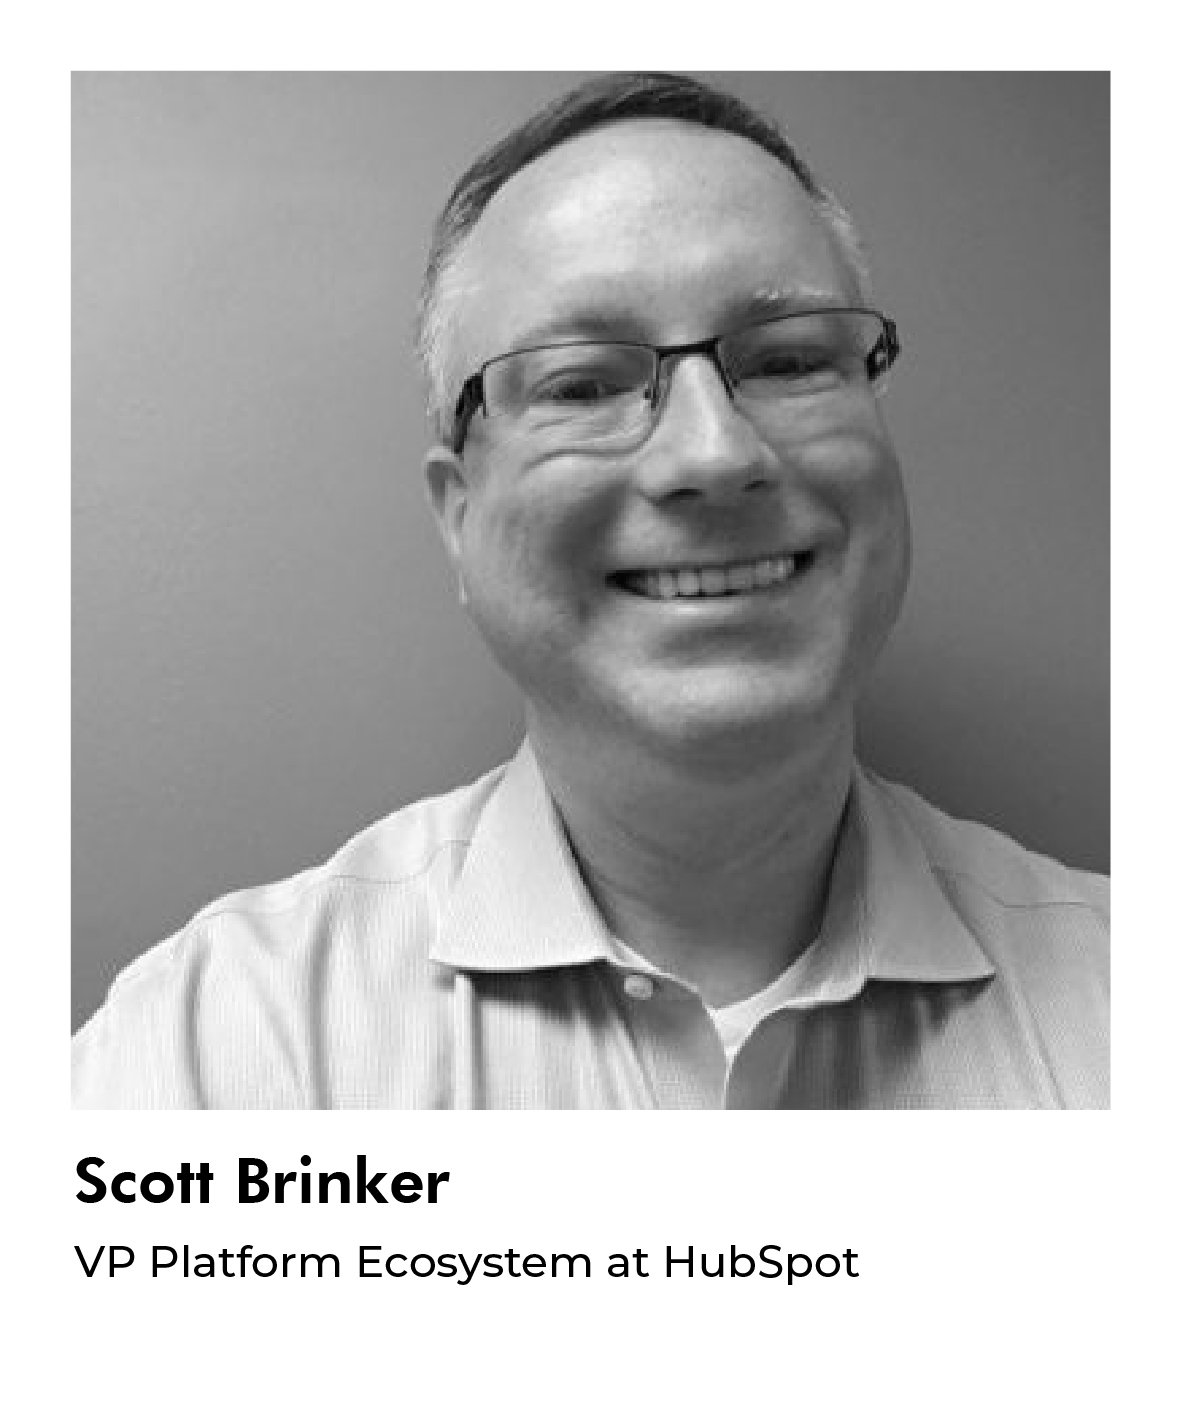 Scott Brinker